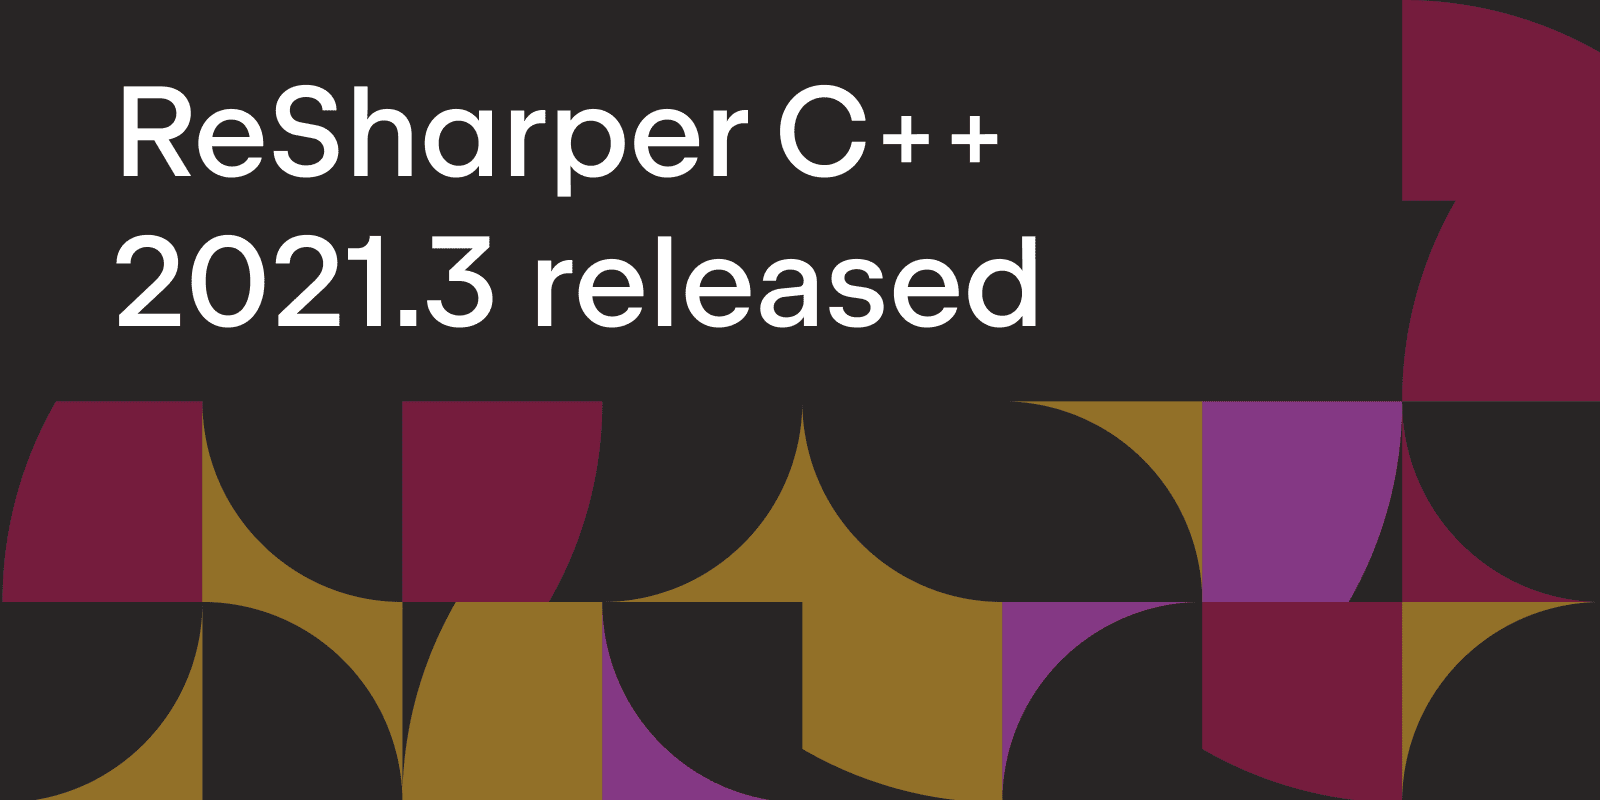 ReSharper C++ 2021.3